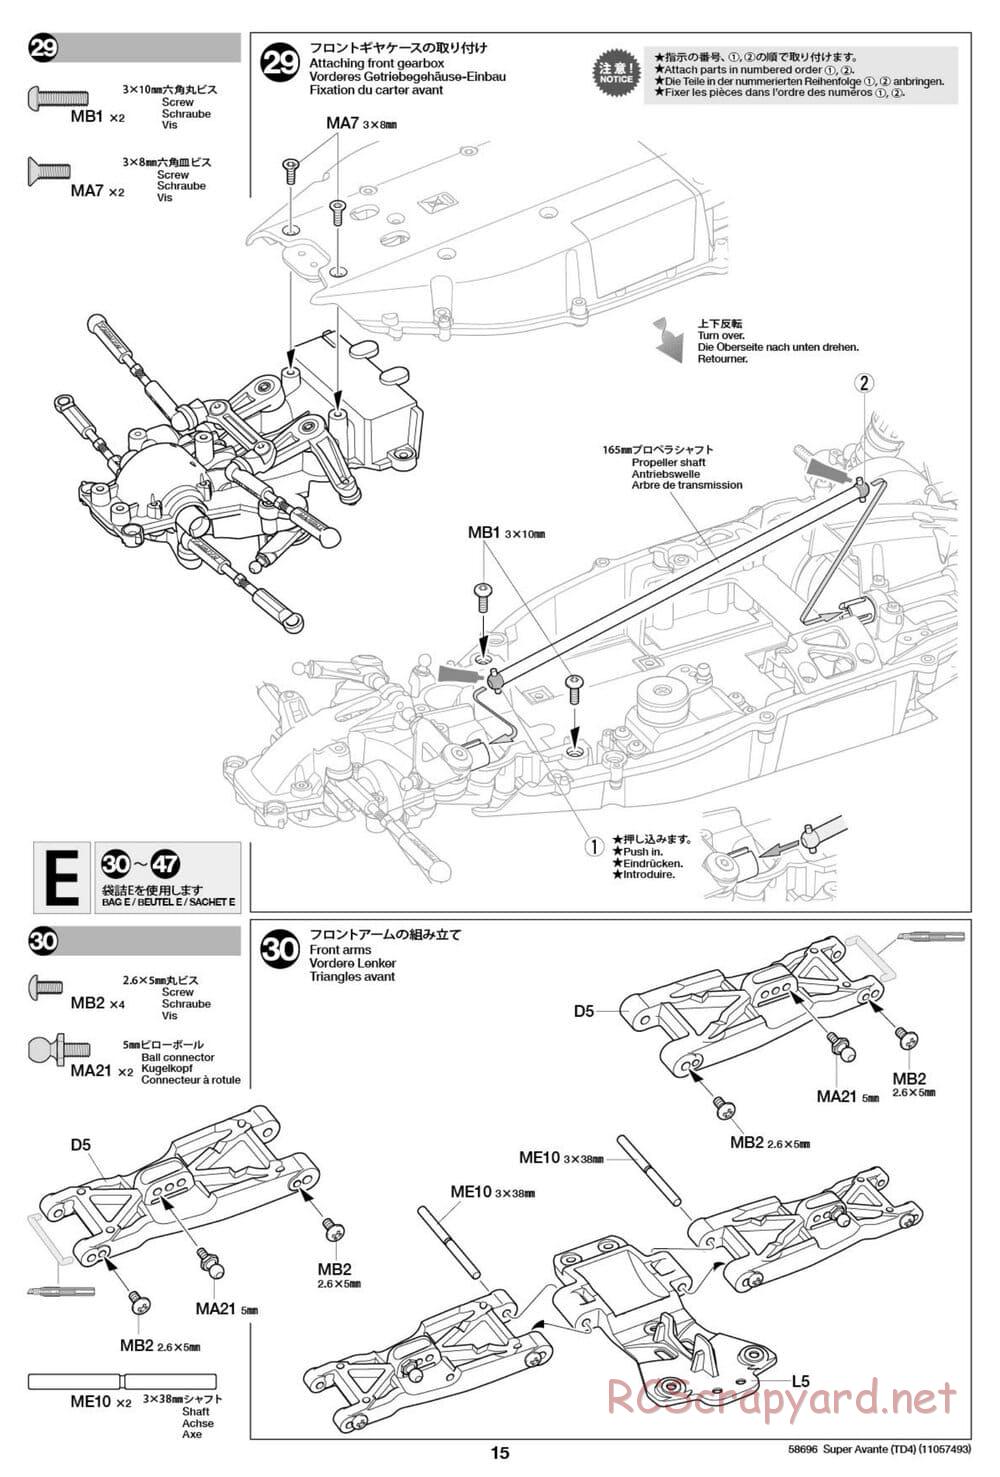 Tamiya - Super Avante - TD4 Chassis - Manual - Page 16